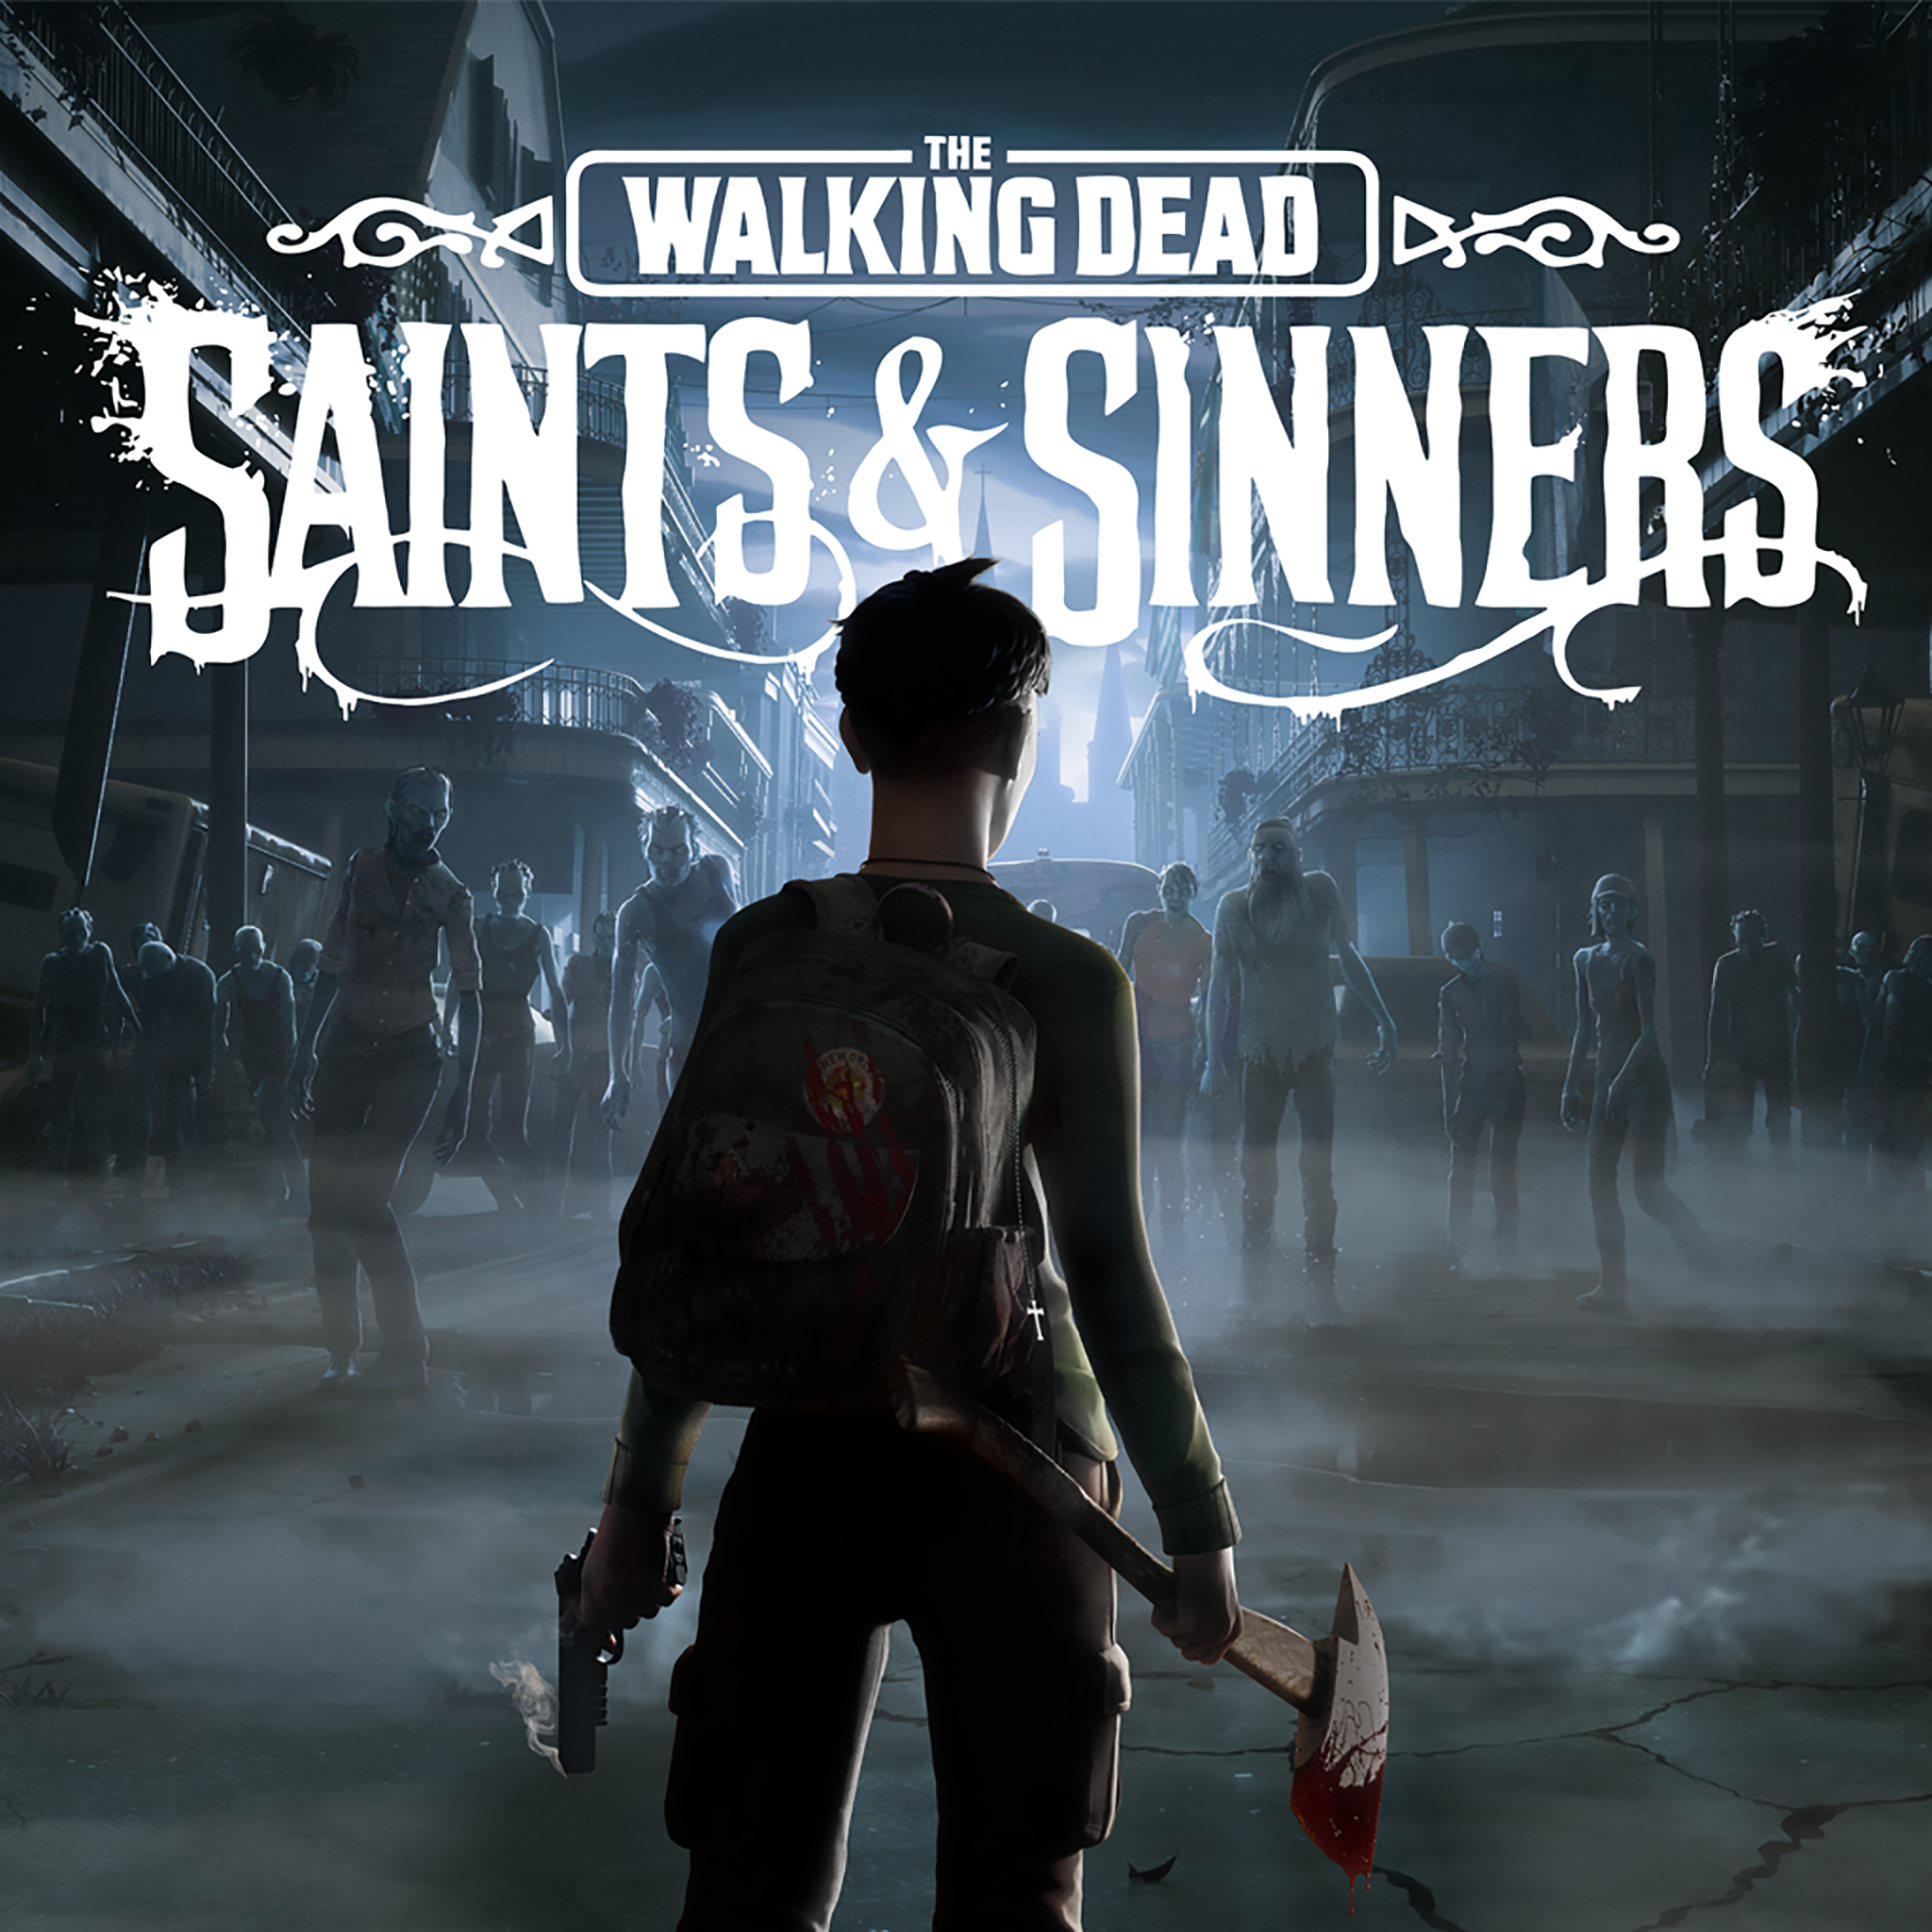 The Walking Dead: Saints & Sinners Picture